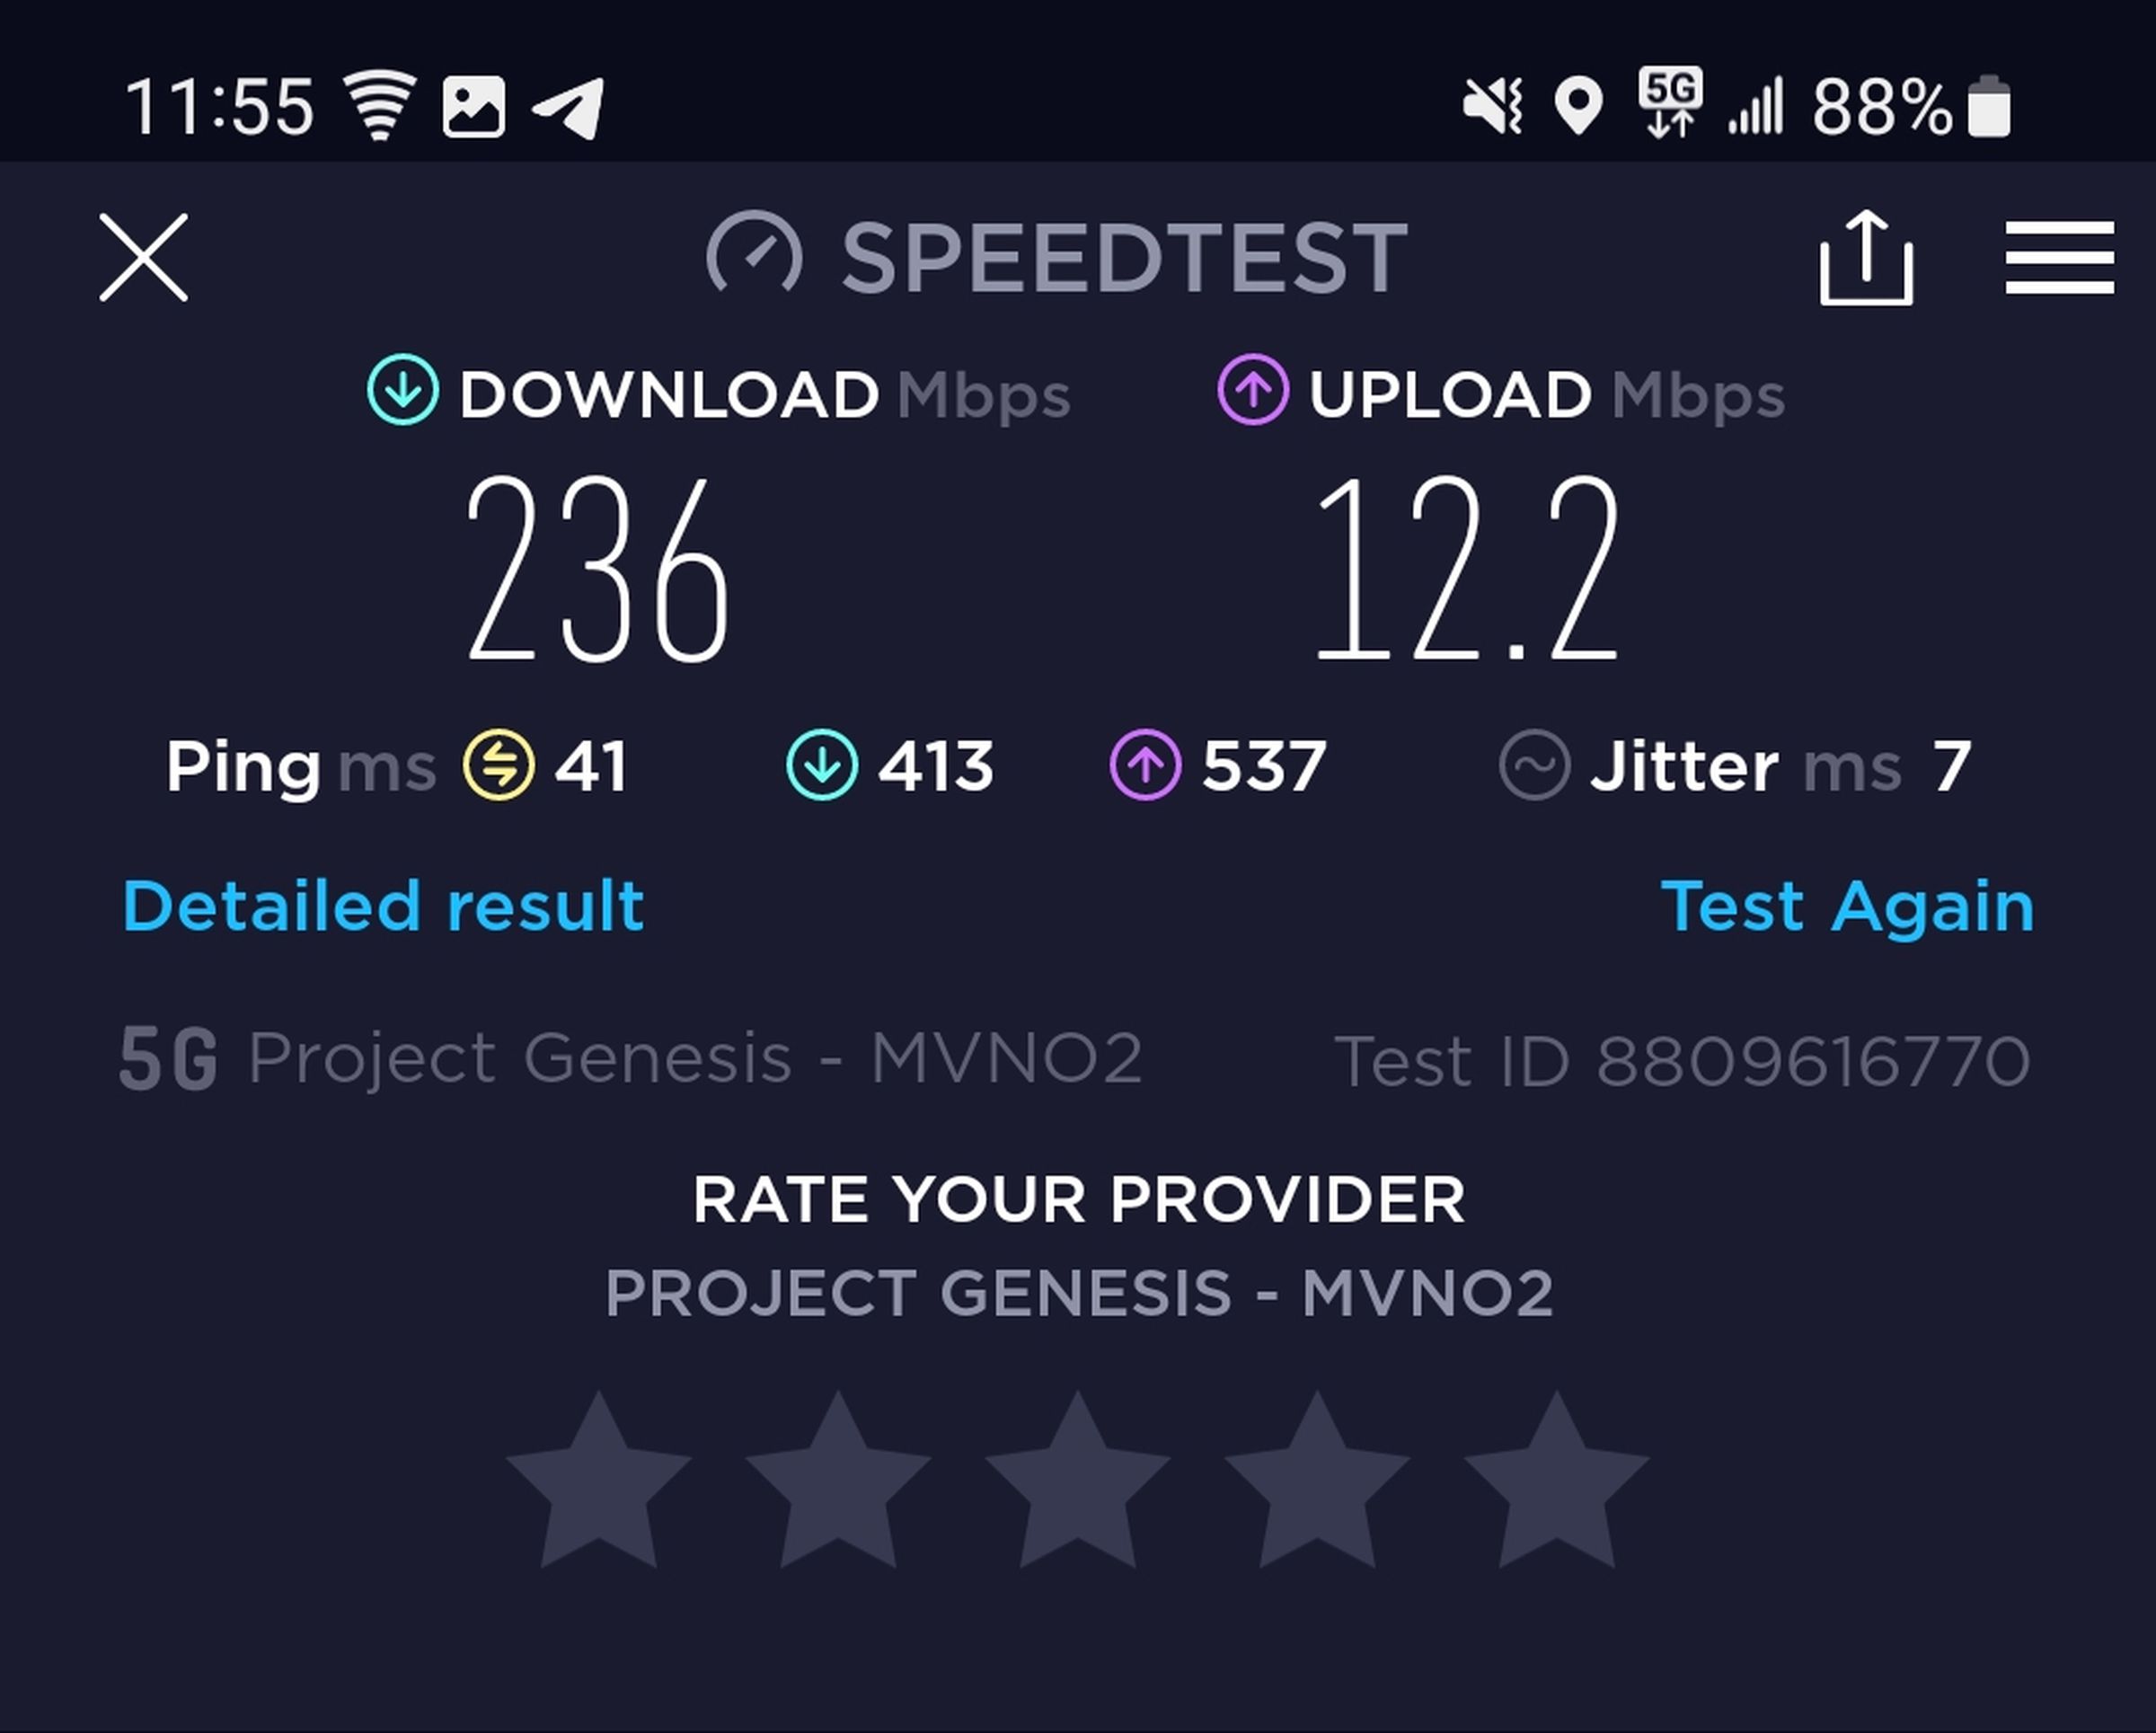 Screenshot of a speedtest result showing a download speed of 236 Mbps, and upload speed of 12.2 Mbps.